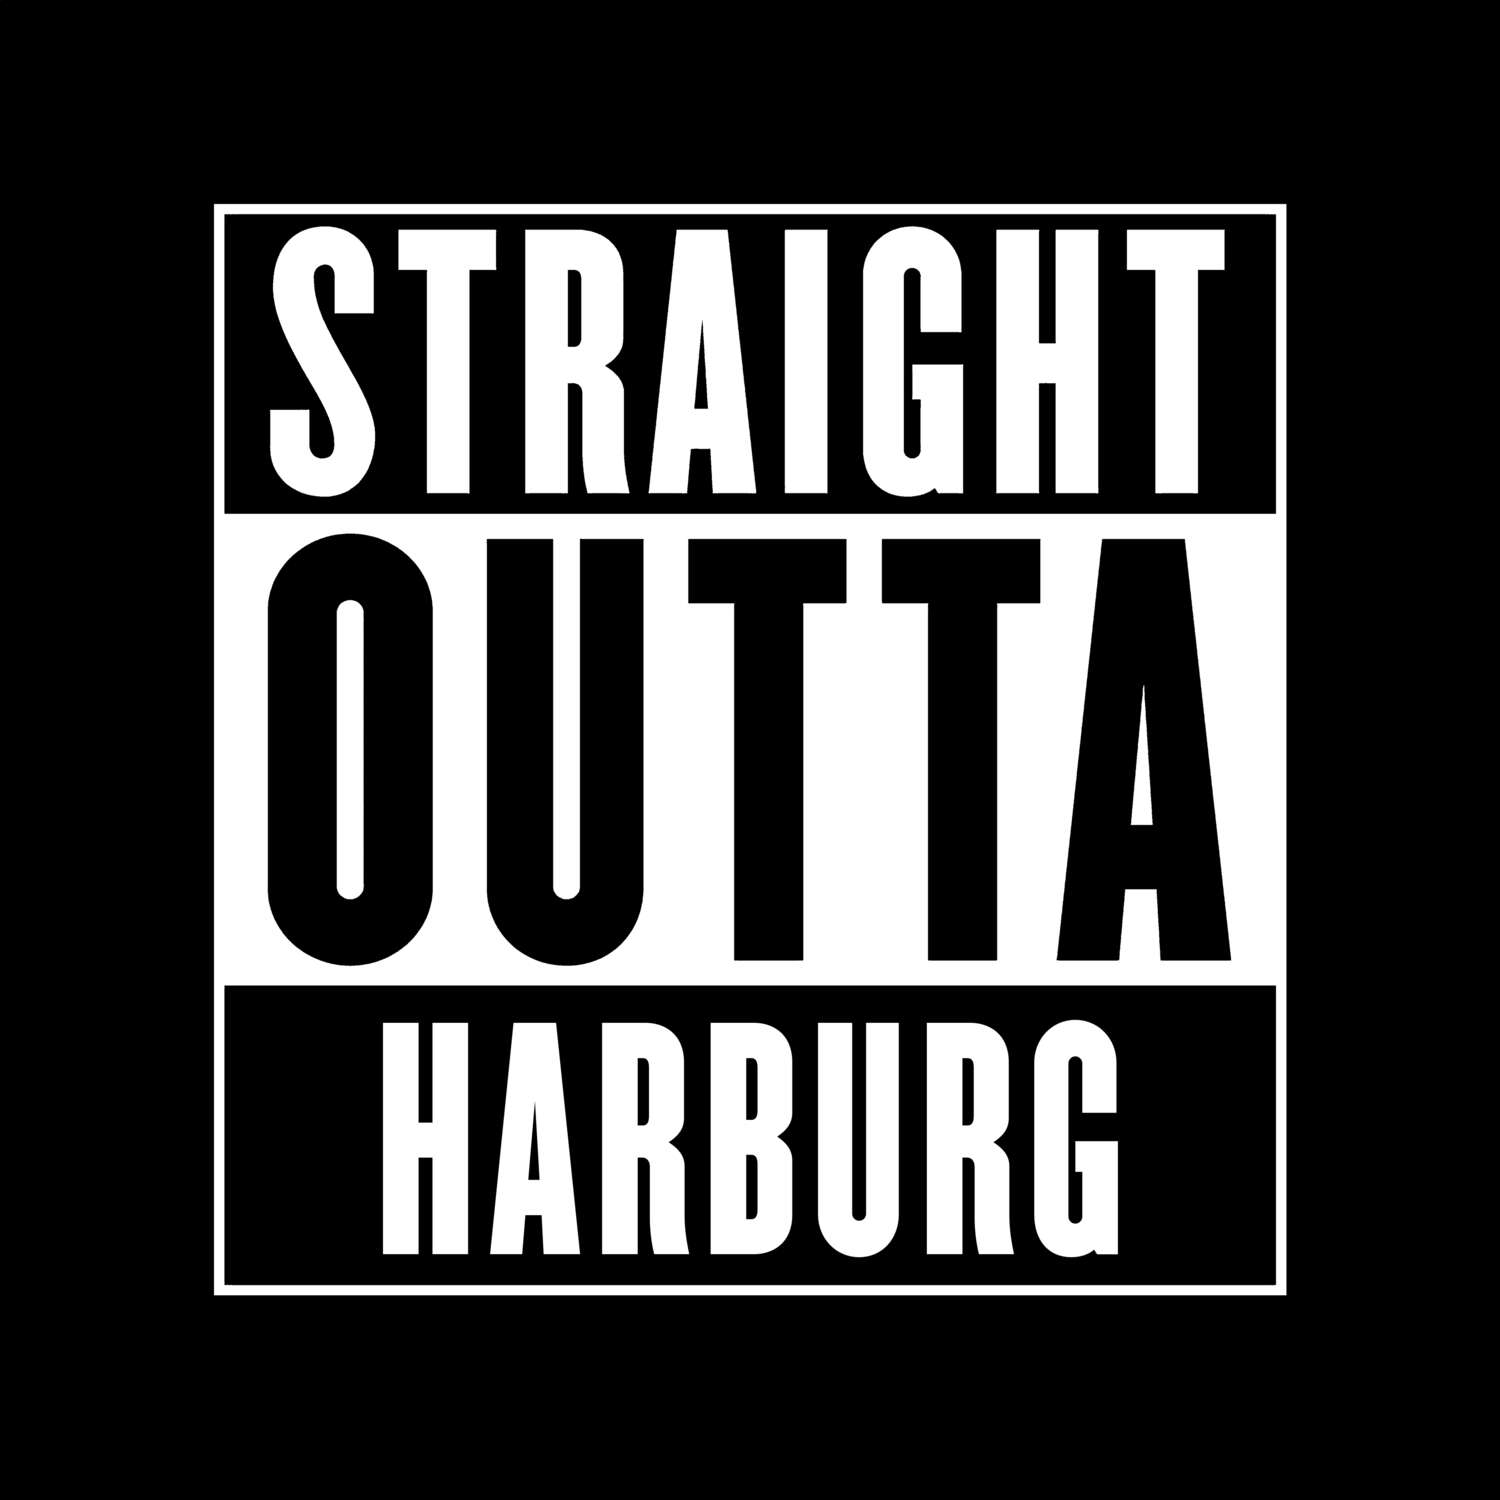 Harburg T-Shirt »Straight Outta«